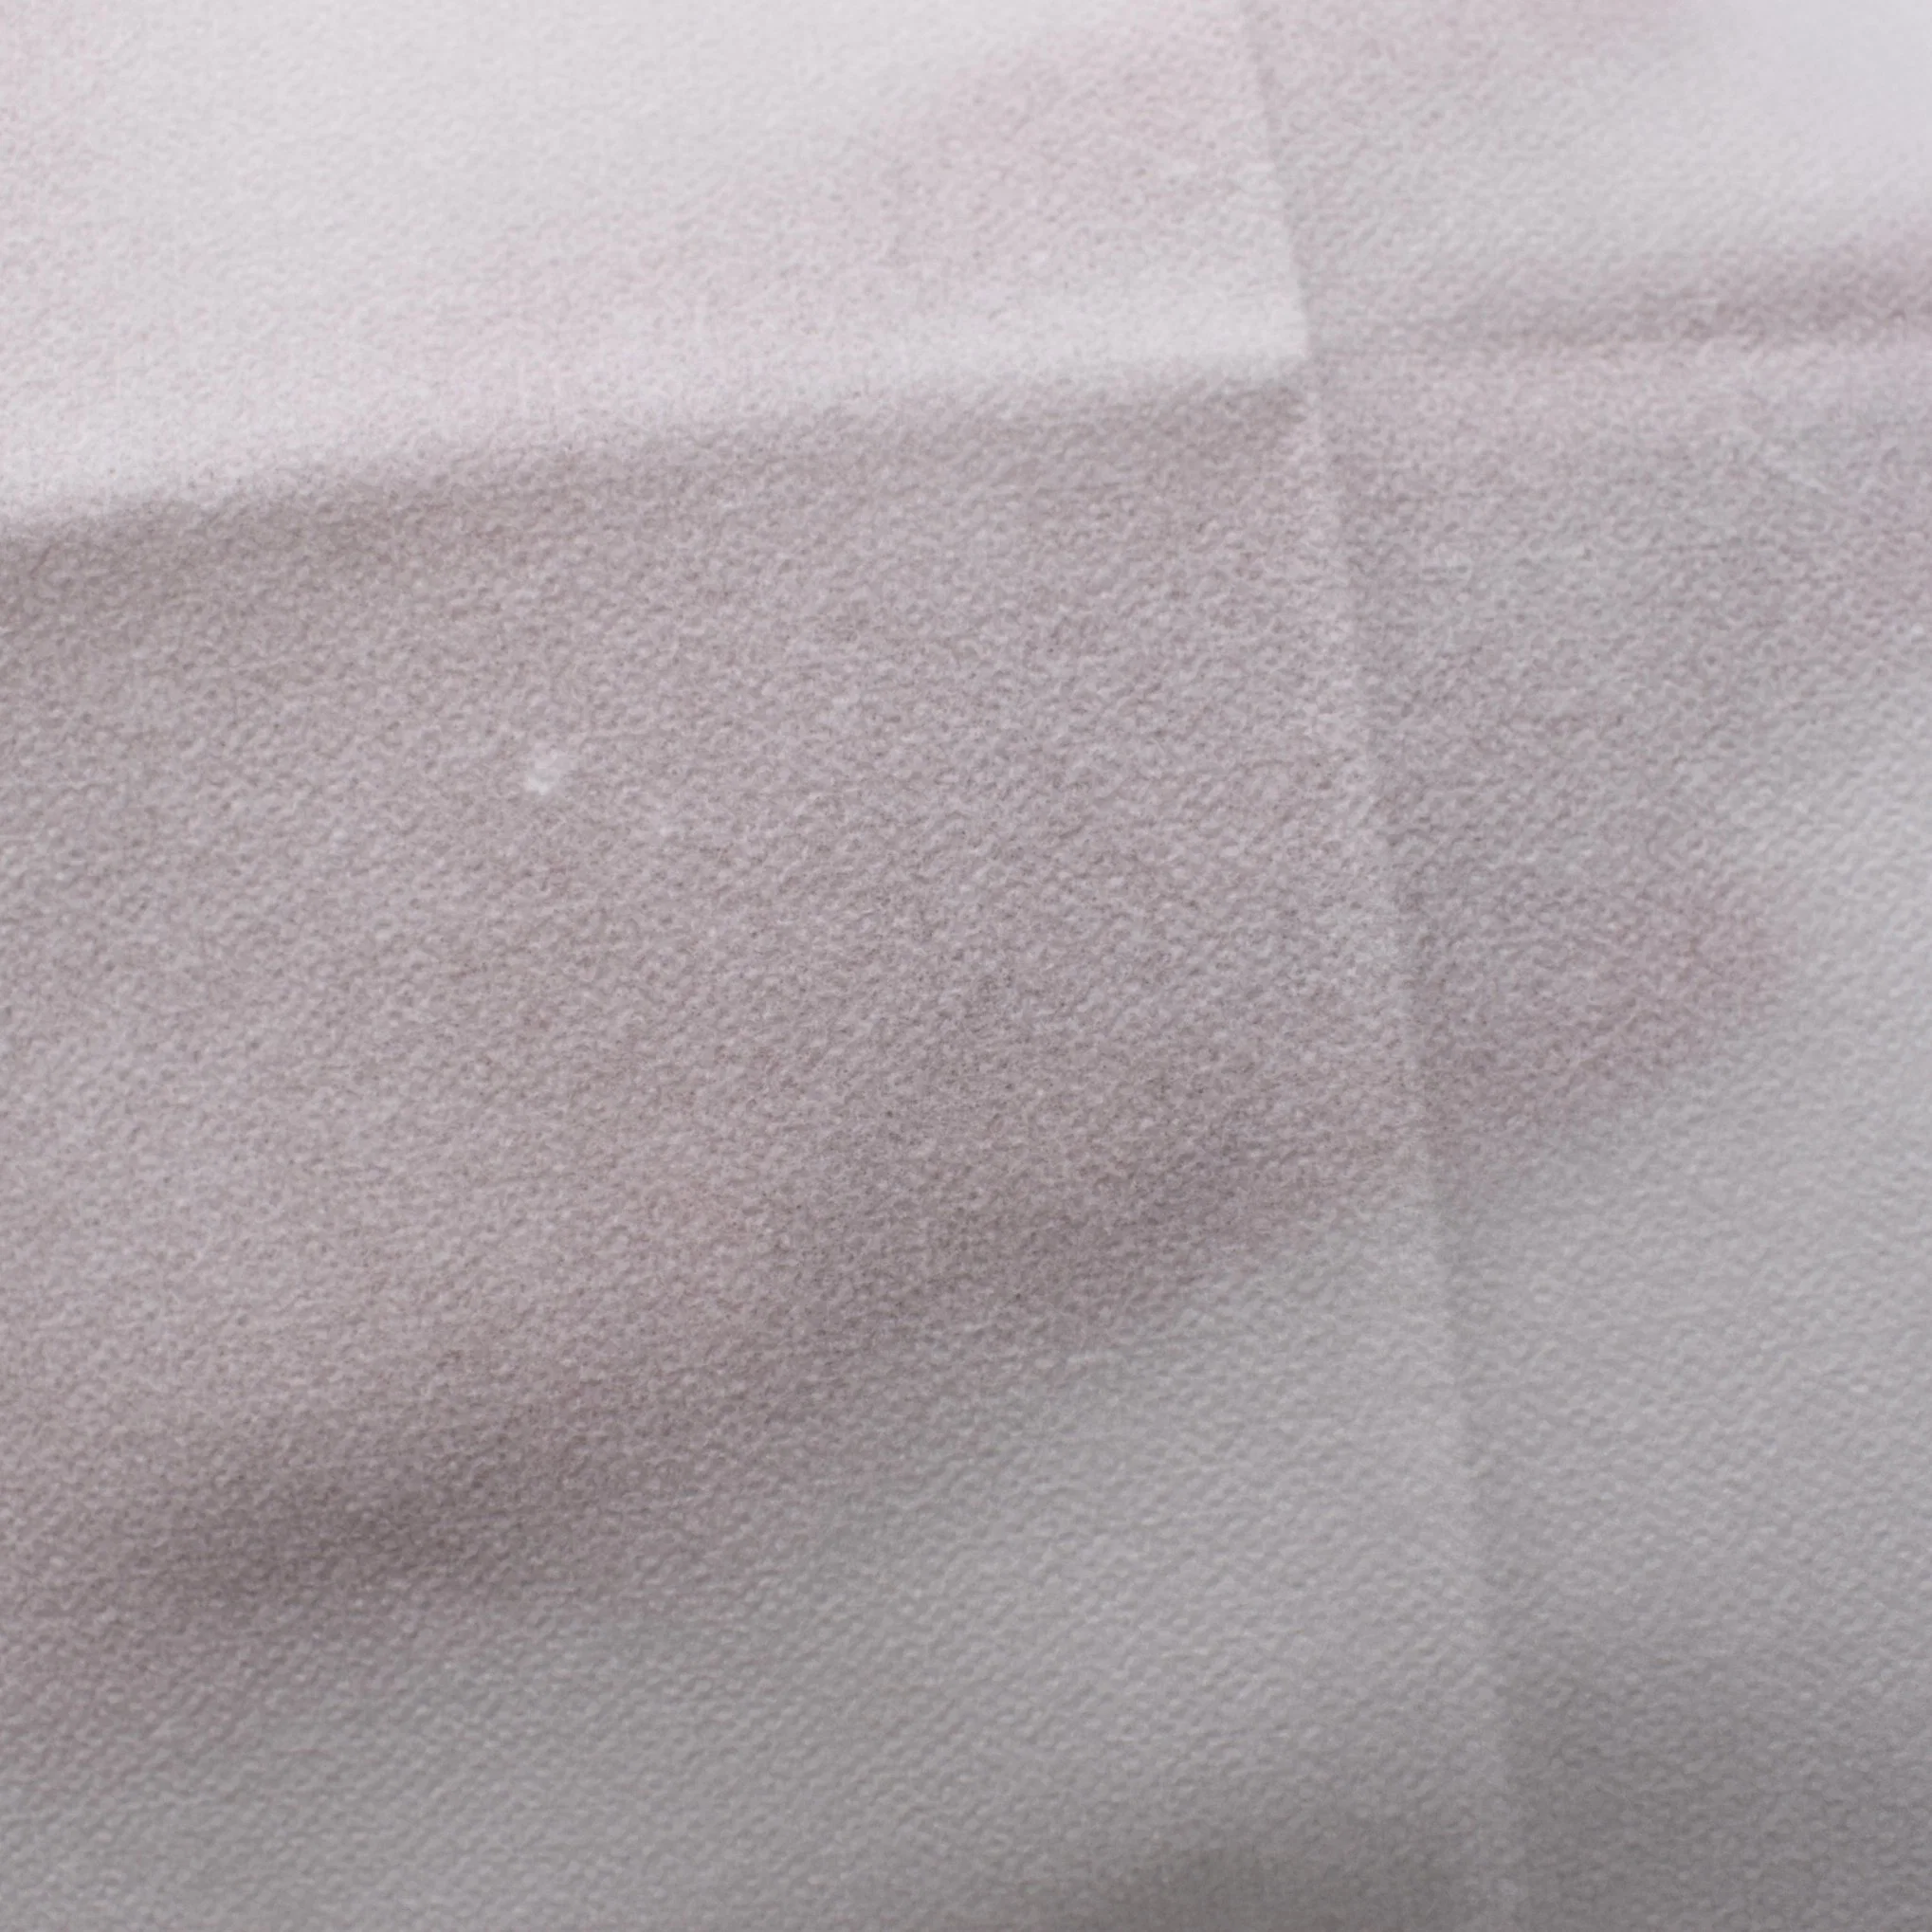 Airlaid Serviette Dinner Paper Luxury Napkin Tissue Paper for Wedding